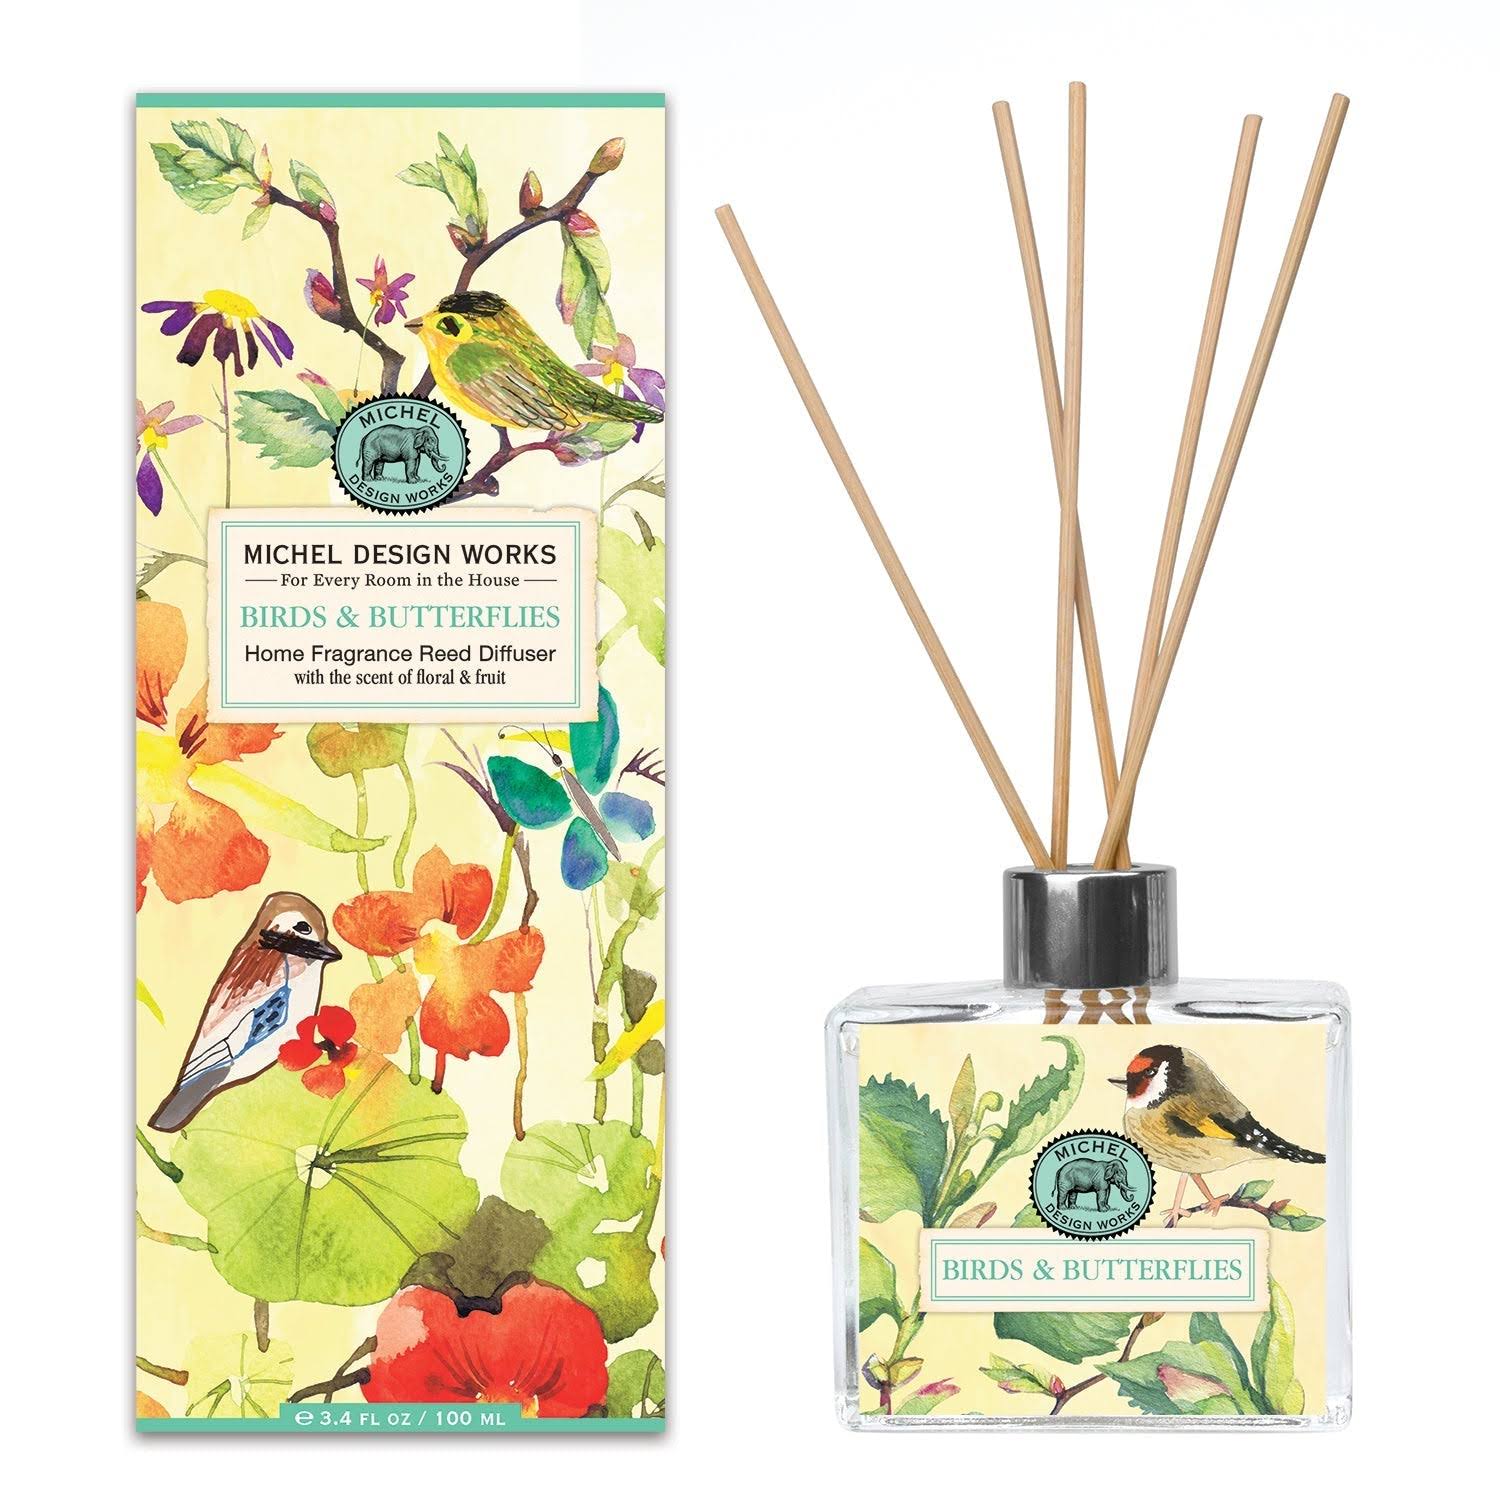 Michel Design Works : Birds & Butterflies Home Fragrance Reed Diffuser